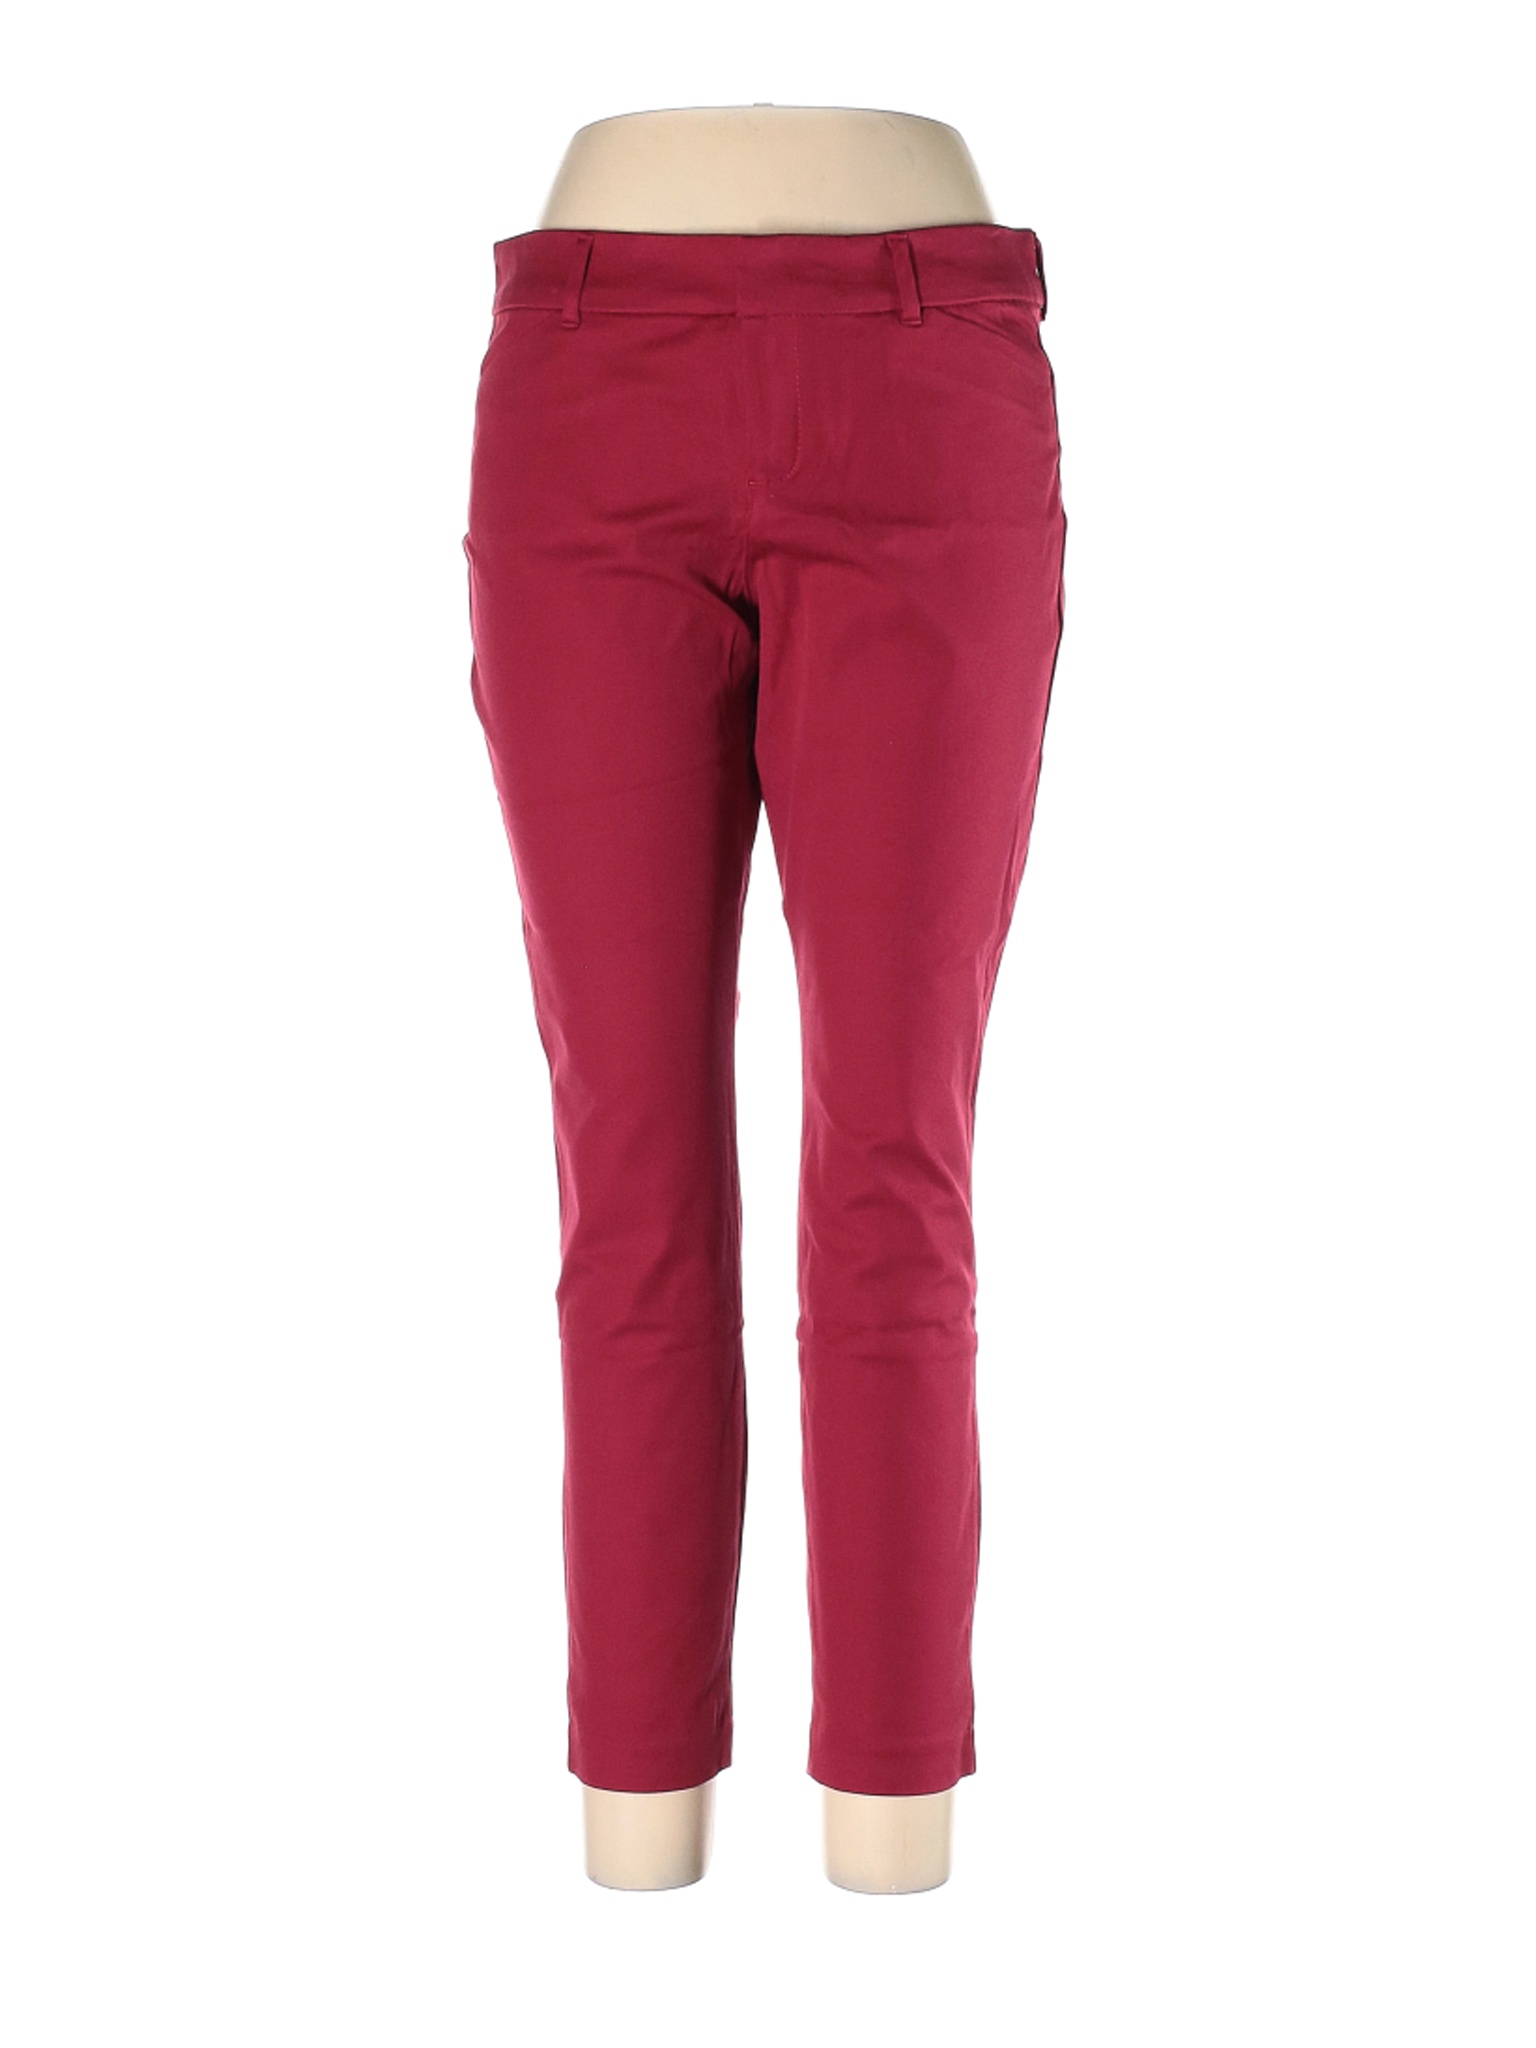 NWT Old Navy Women Red Dress Pants 12 Petites | eBay